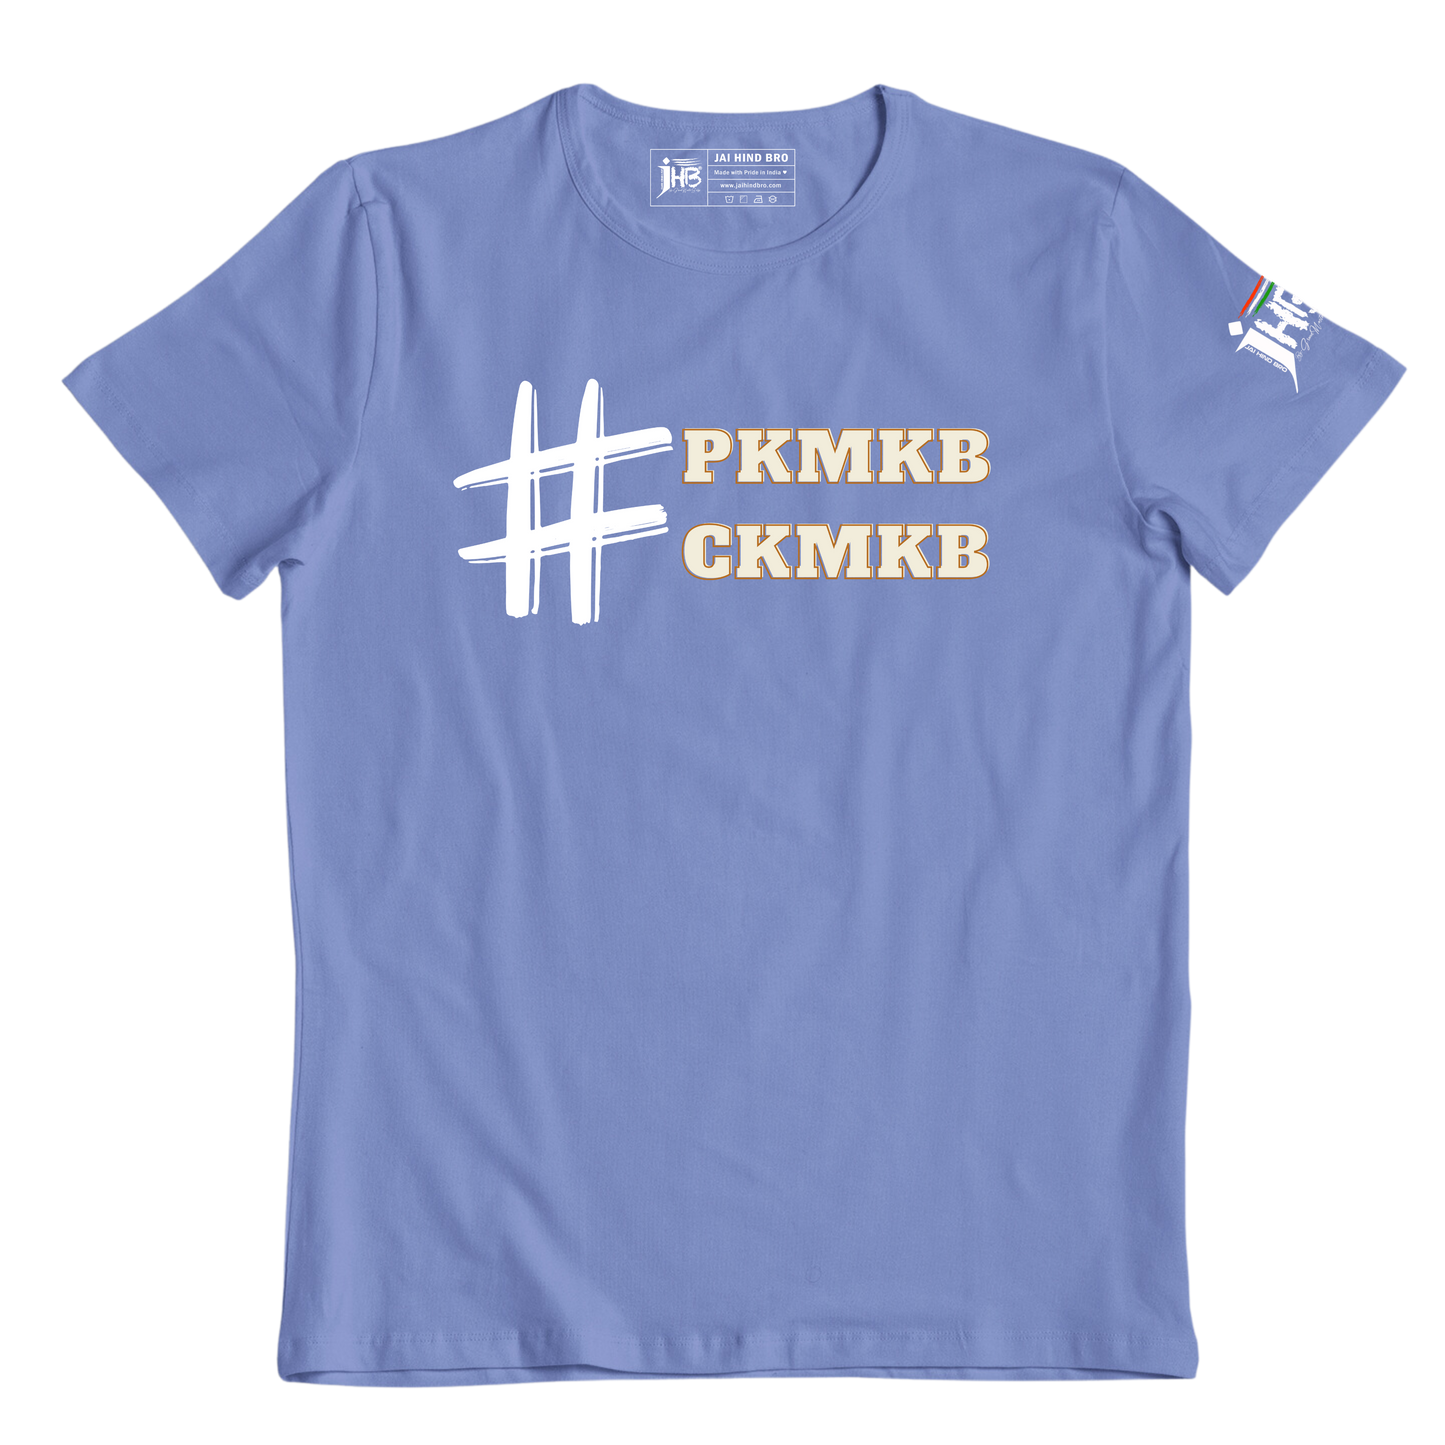 PKMKB/CKMKB ELECTRIC BLUE OVERSIZED T-SHIRT